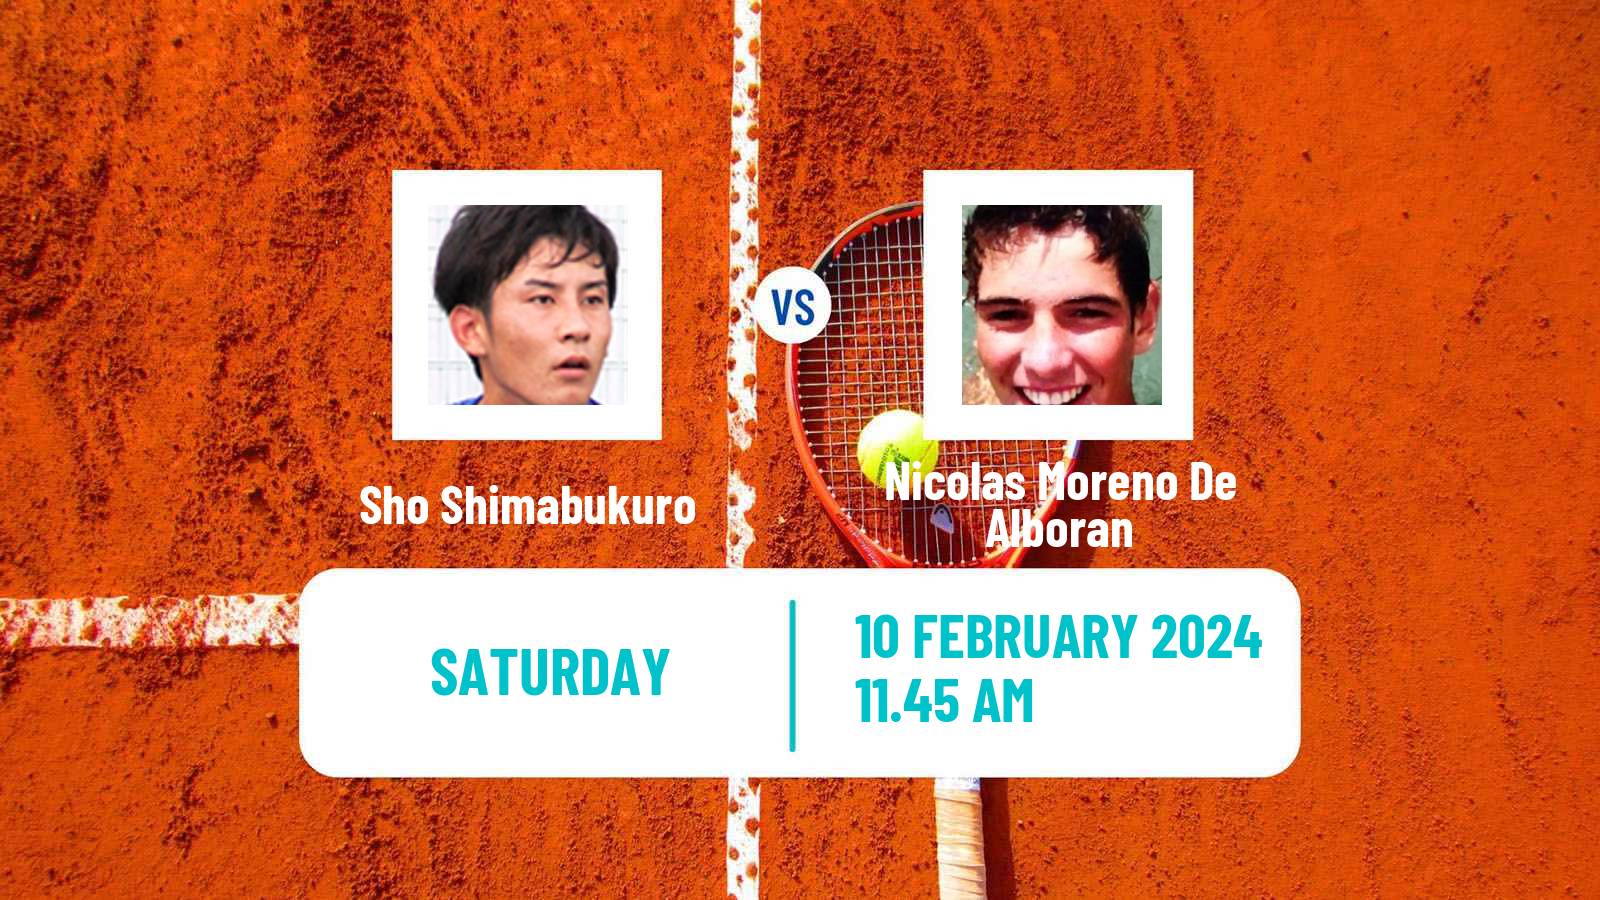 Tennis ATP Delray Beach Sho Shimabukuro - Nicolas Moreno De Alboran